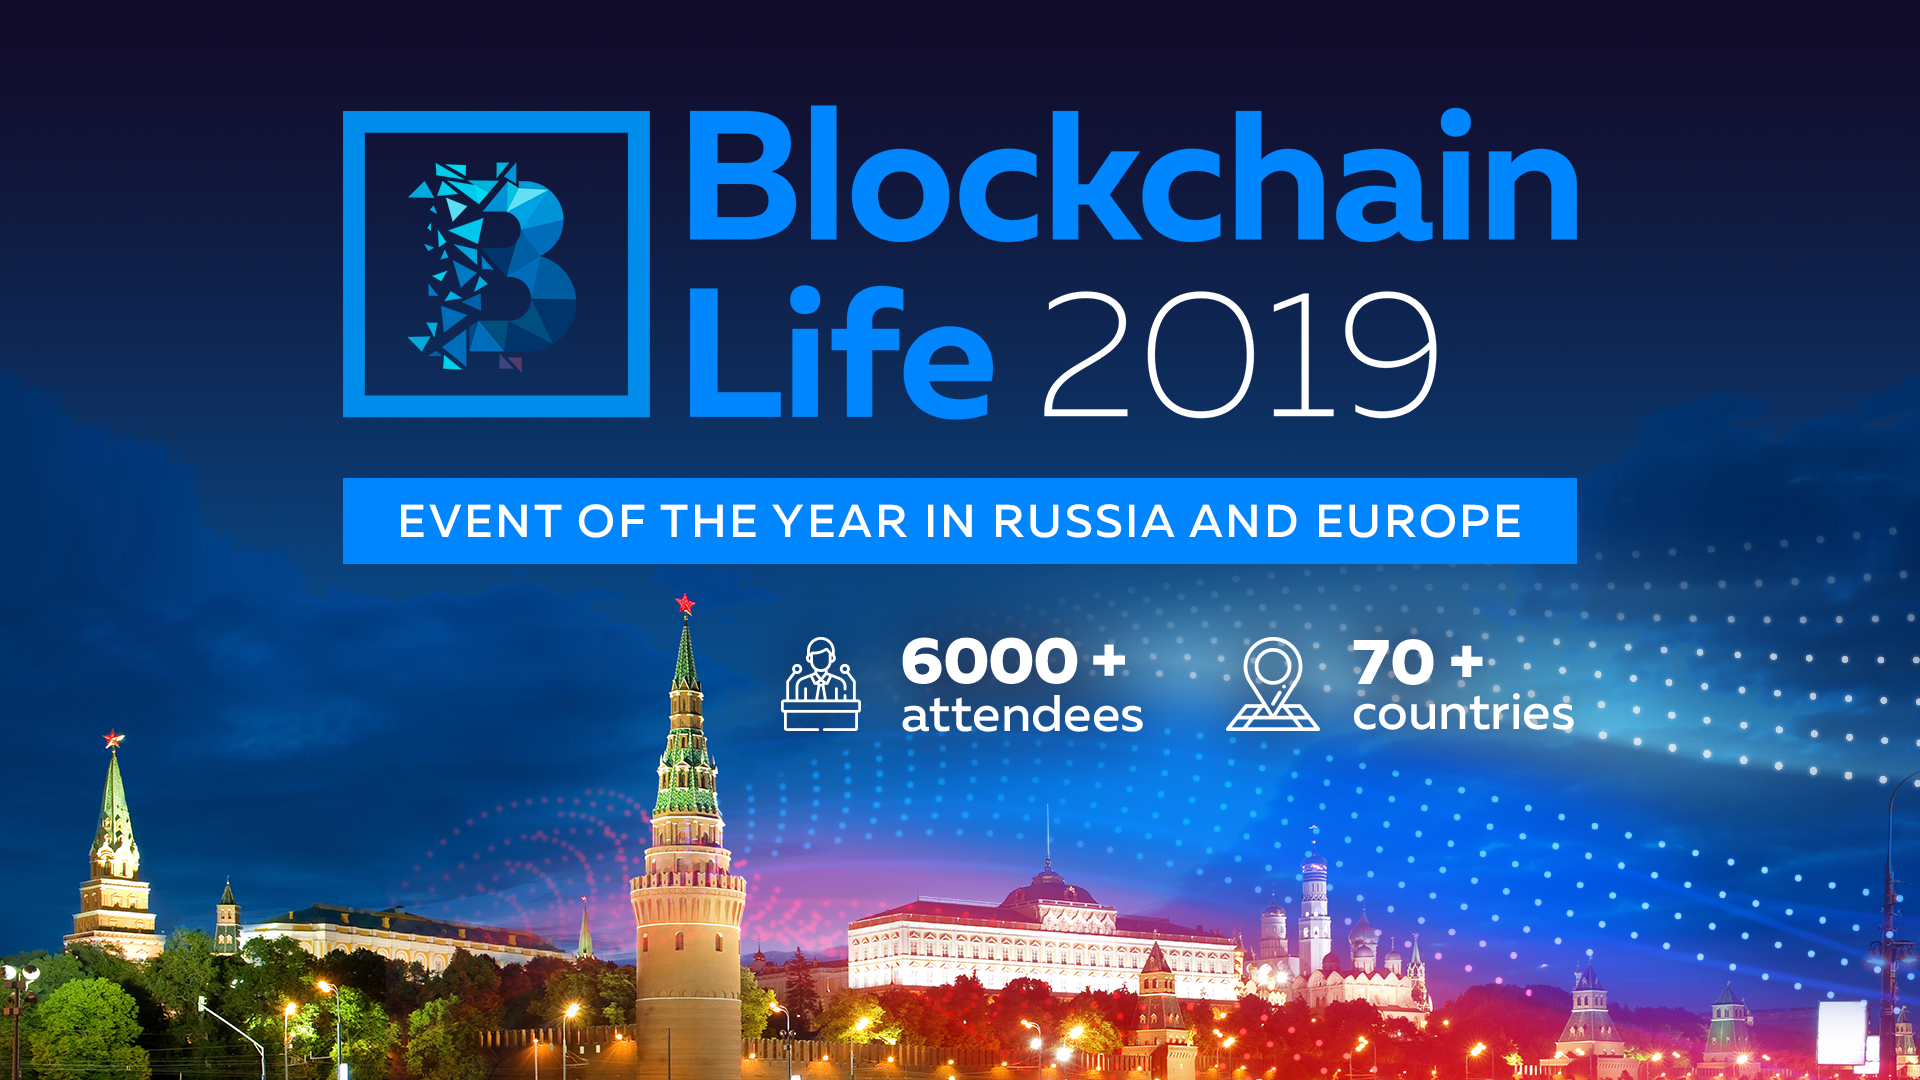 Blockchain Life 2019 Moscow